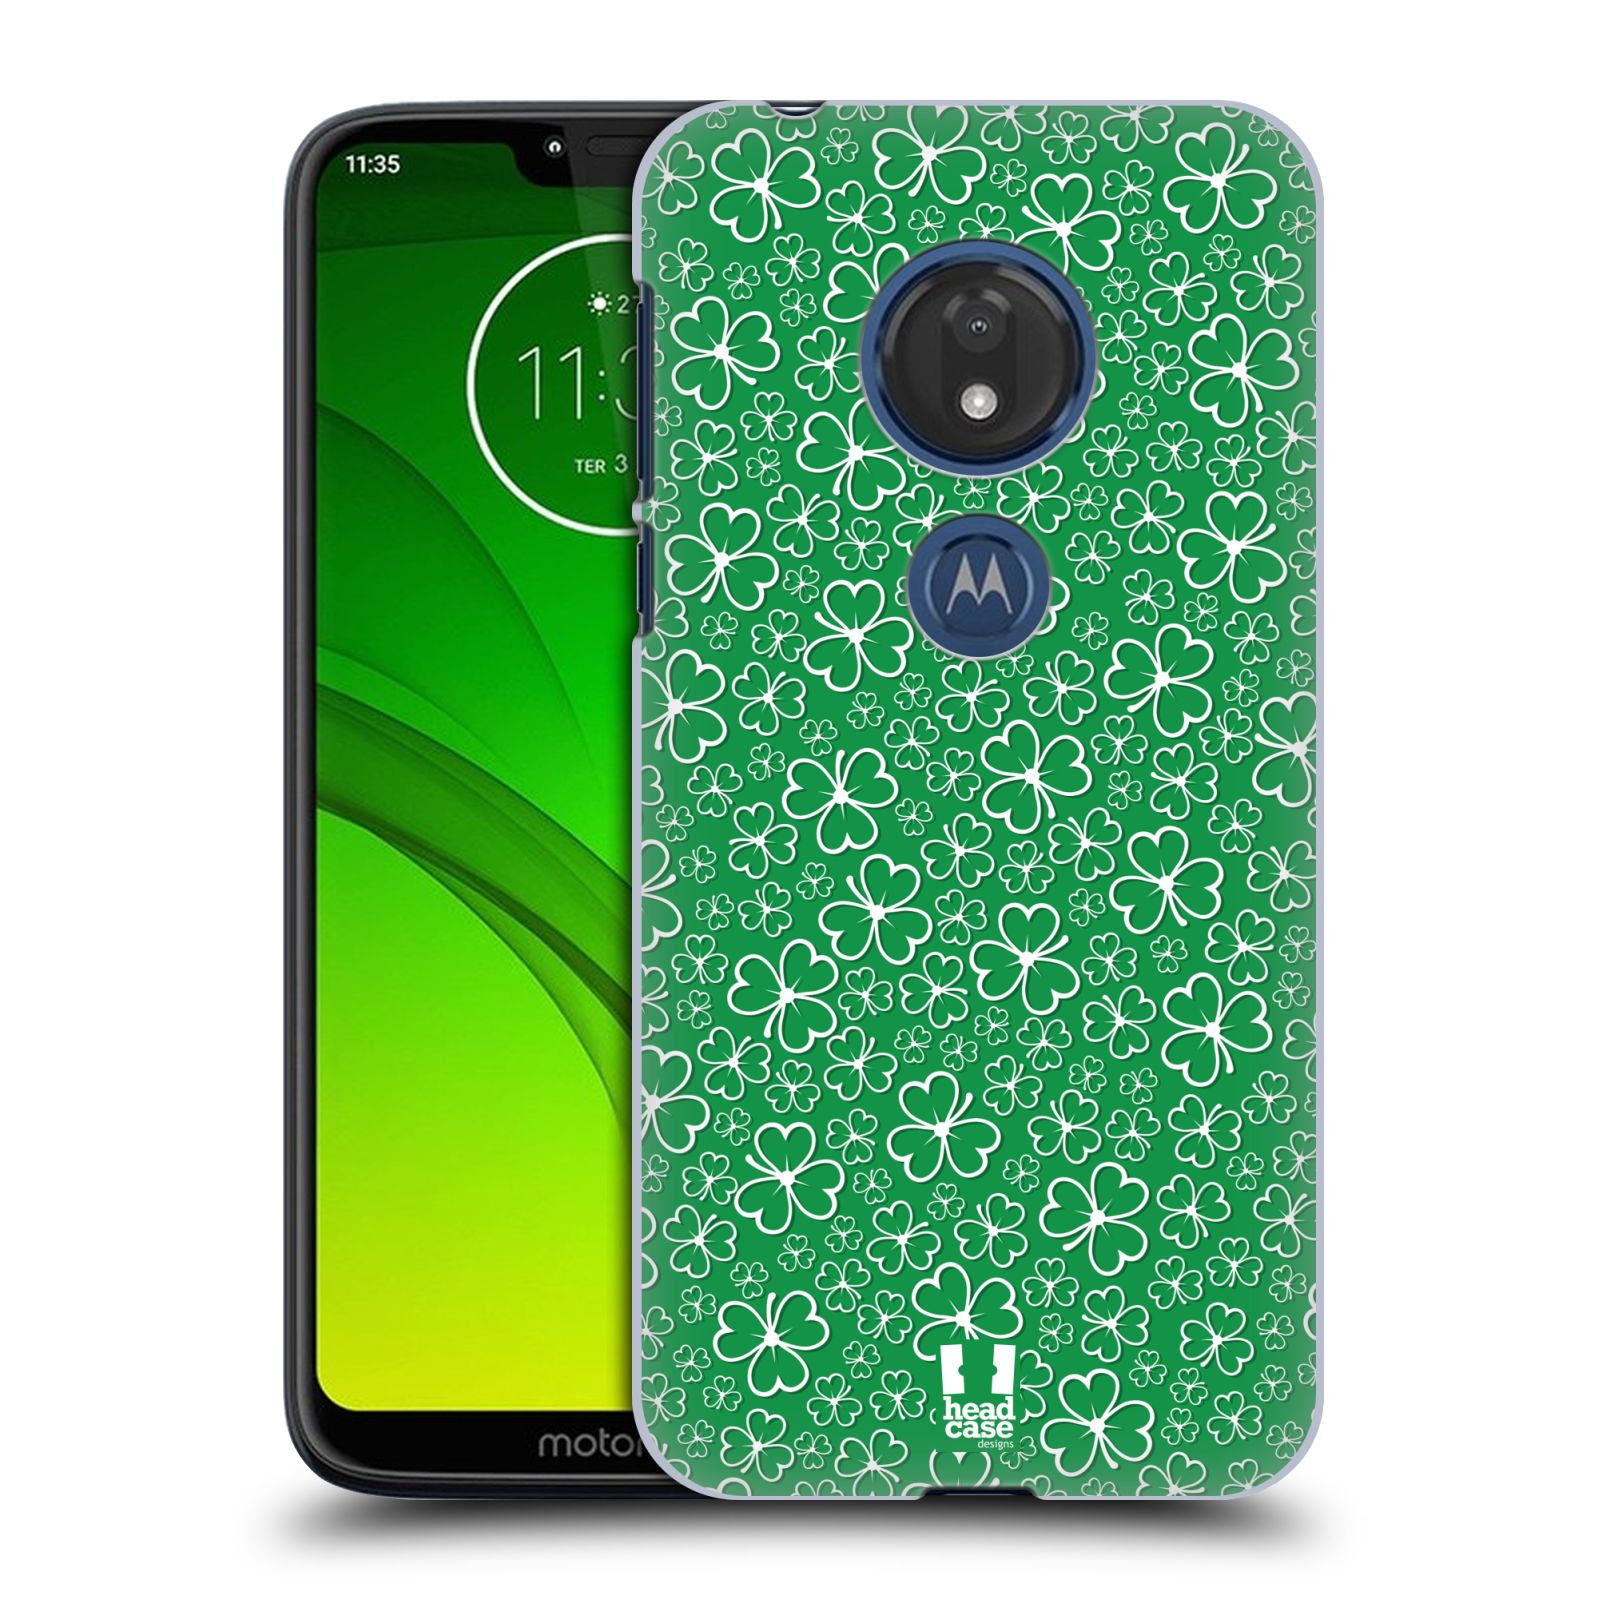 Pouzdro na mobil Motorola Moto G7 Play vzor Kreslený čyřlístek zelená HROMADA